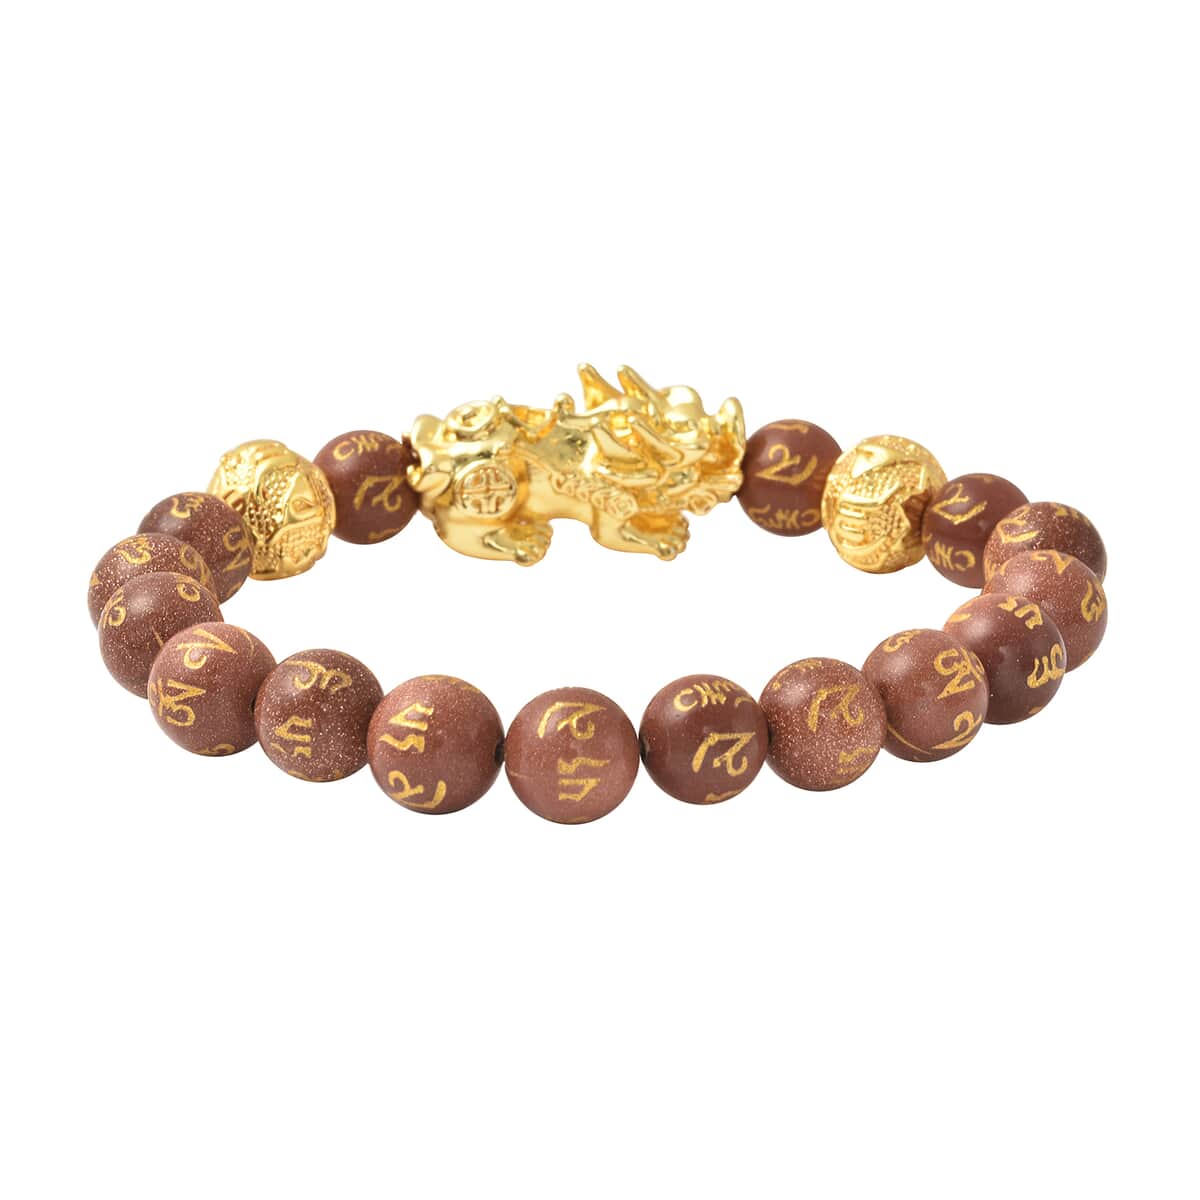 Feng Shui Pixiu Charm Gold Sandstone Carved Beads Stretch Bracelet in Goldtone, Stretchable Bracelet, Good Luck Birthday Gift 129.00 ctw image number 3